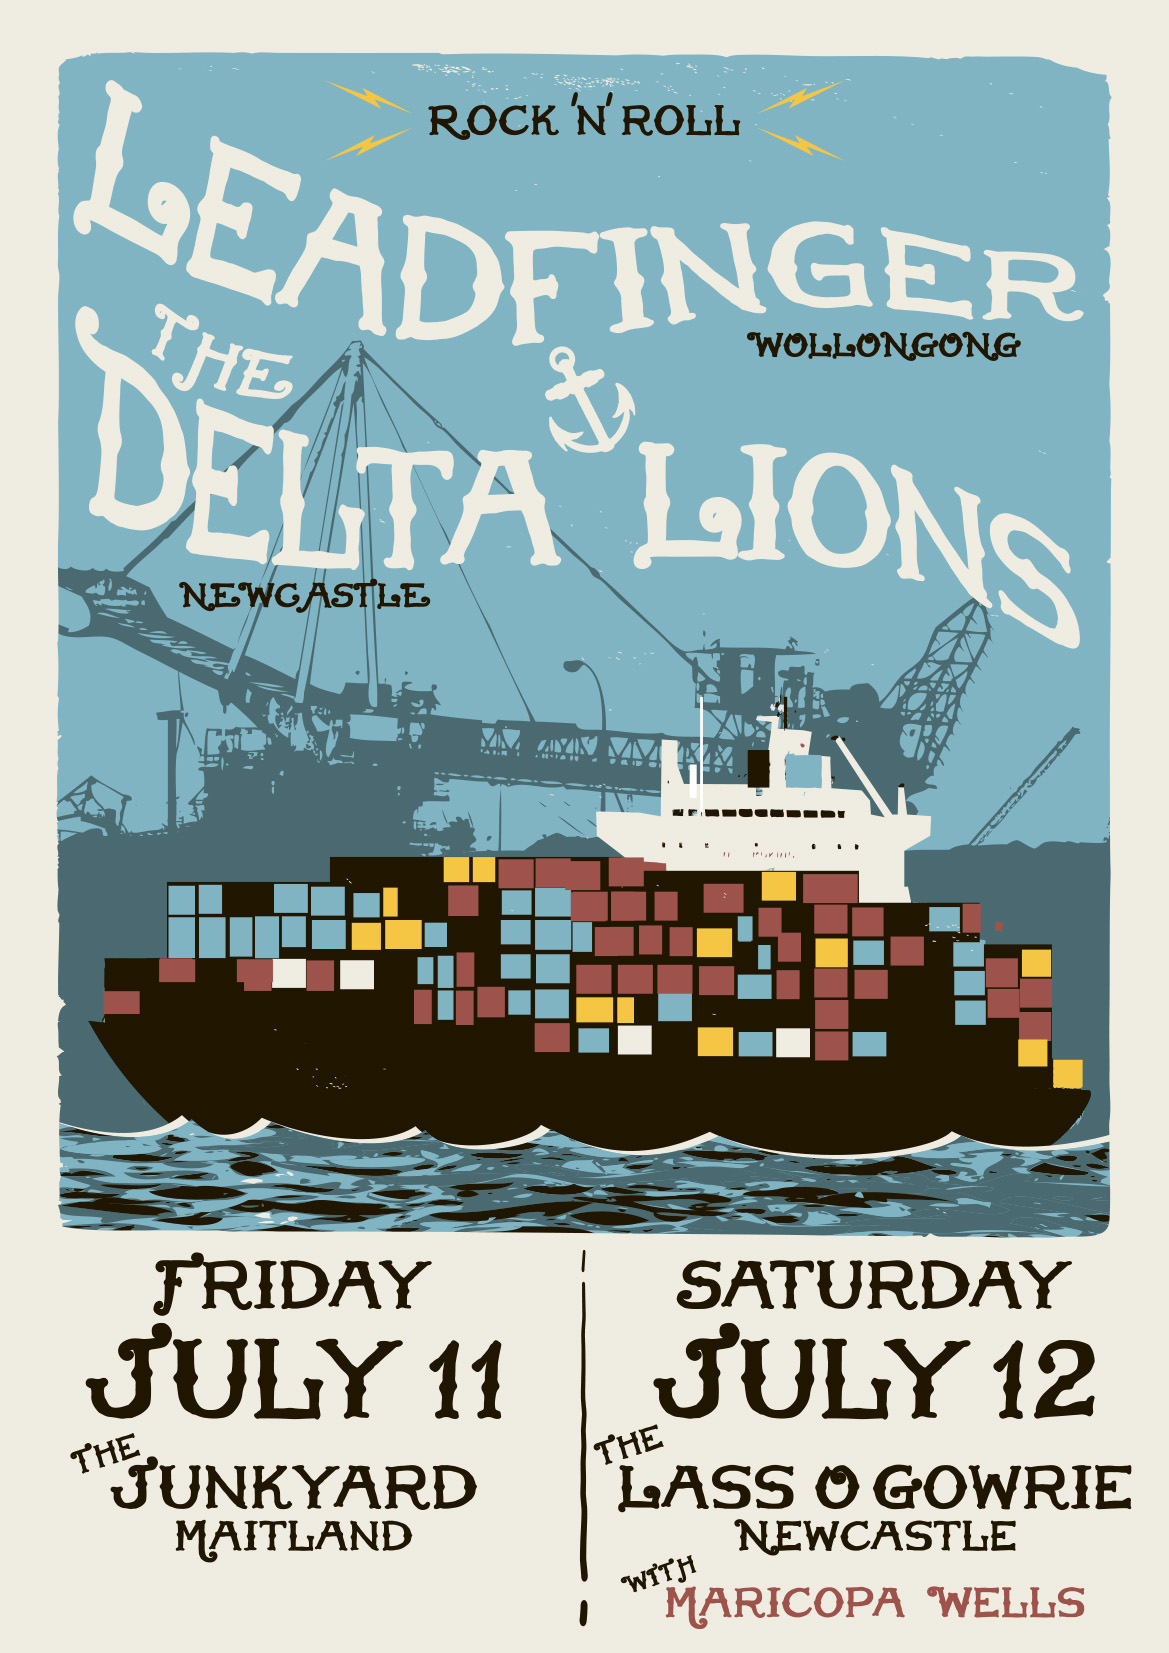 Poster for Delta Lions Leadfinger